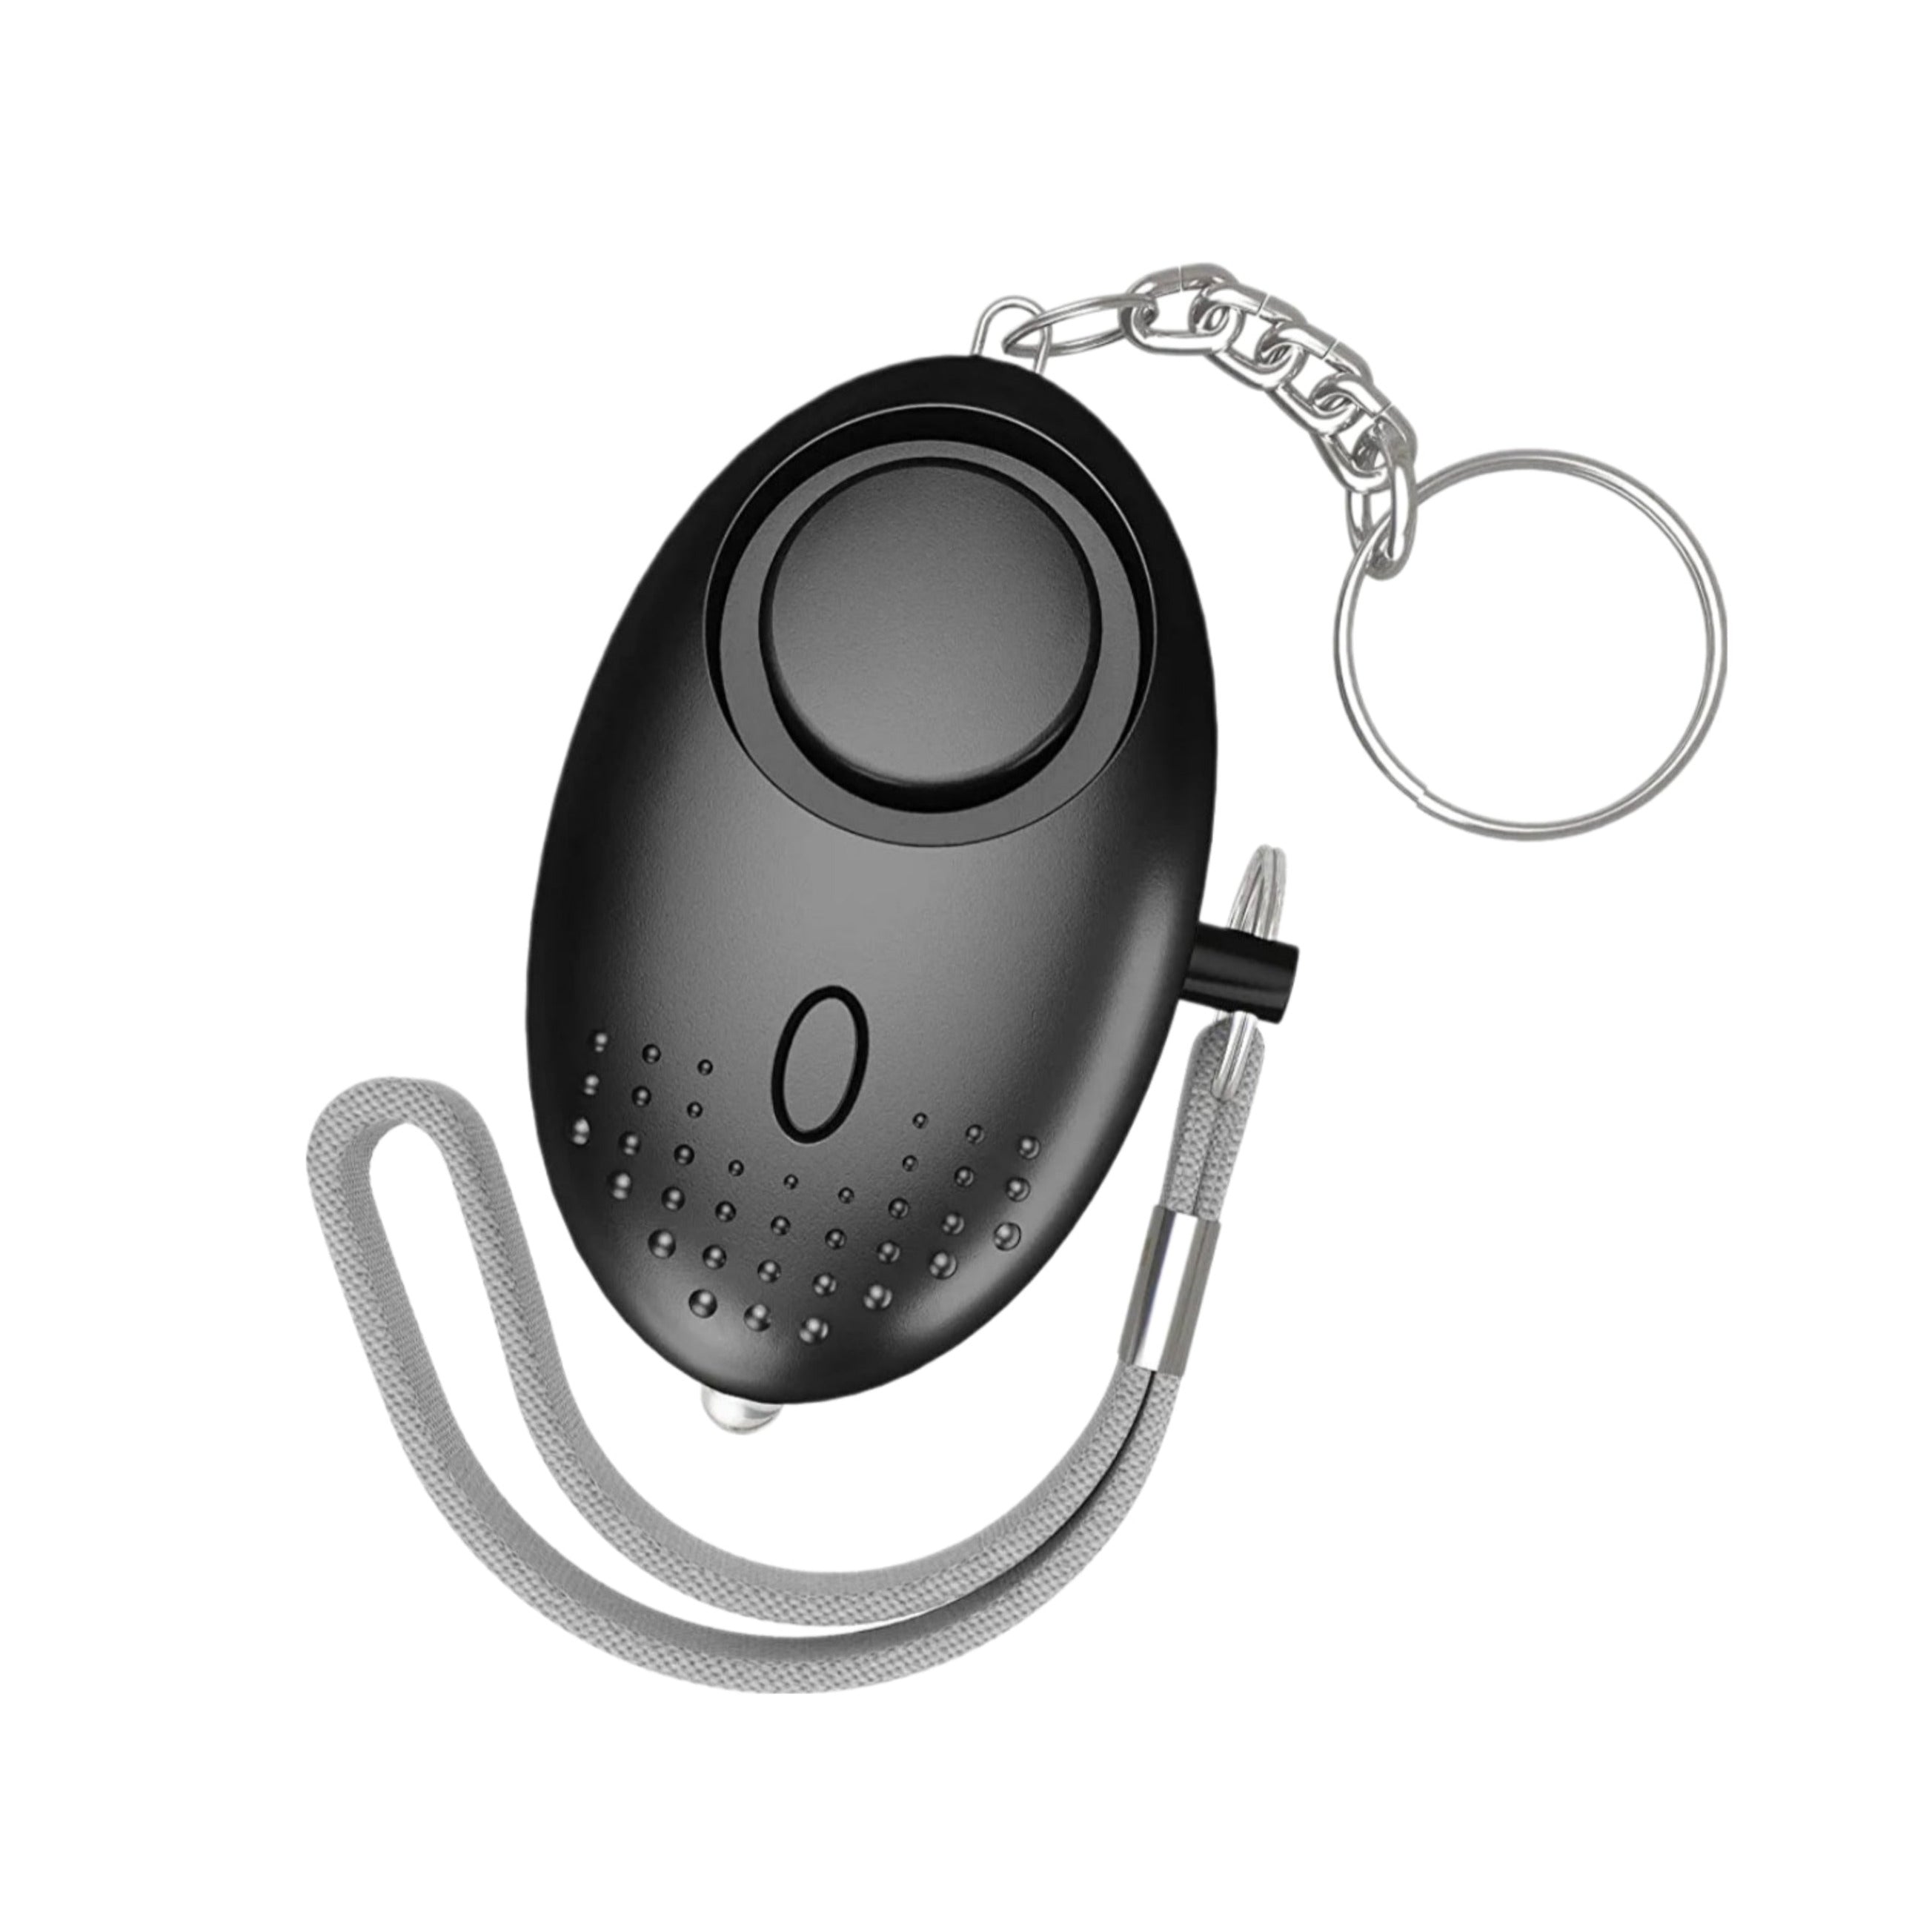 Porte-clés alarme, alarme de poche (130db)